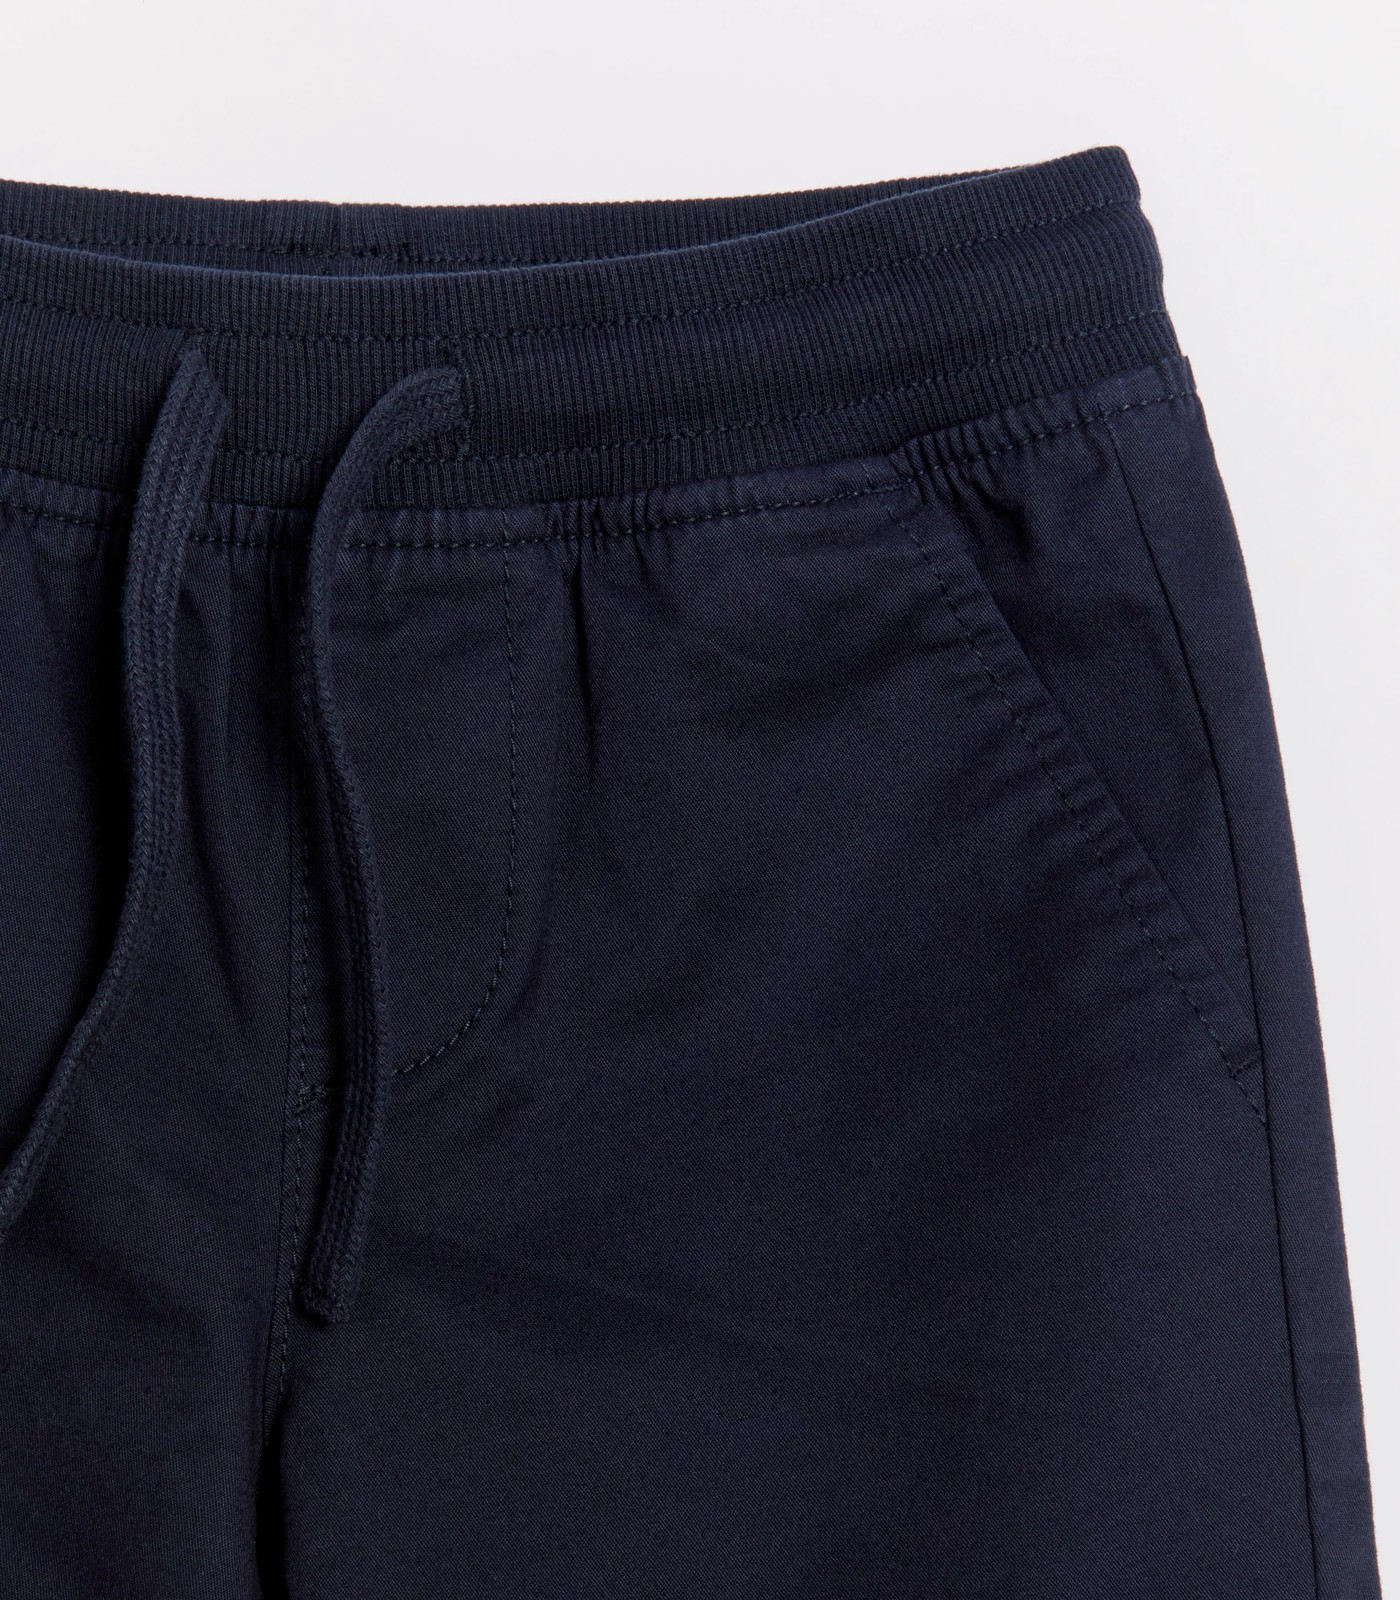 Pull On Chino Shorts - Navy Blue | Target Australia